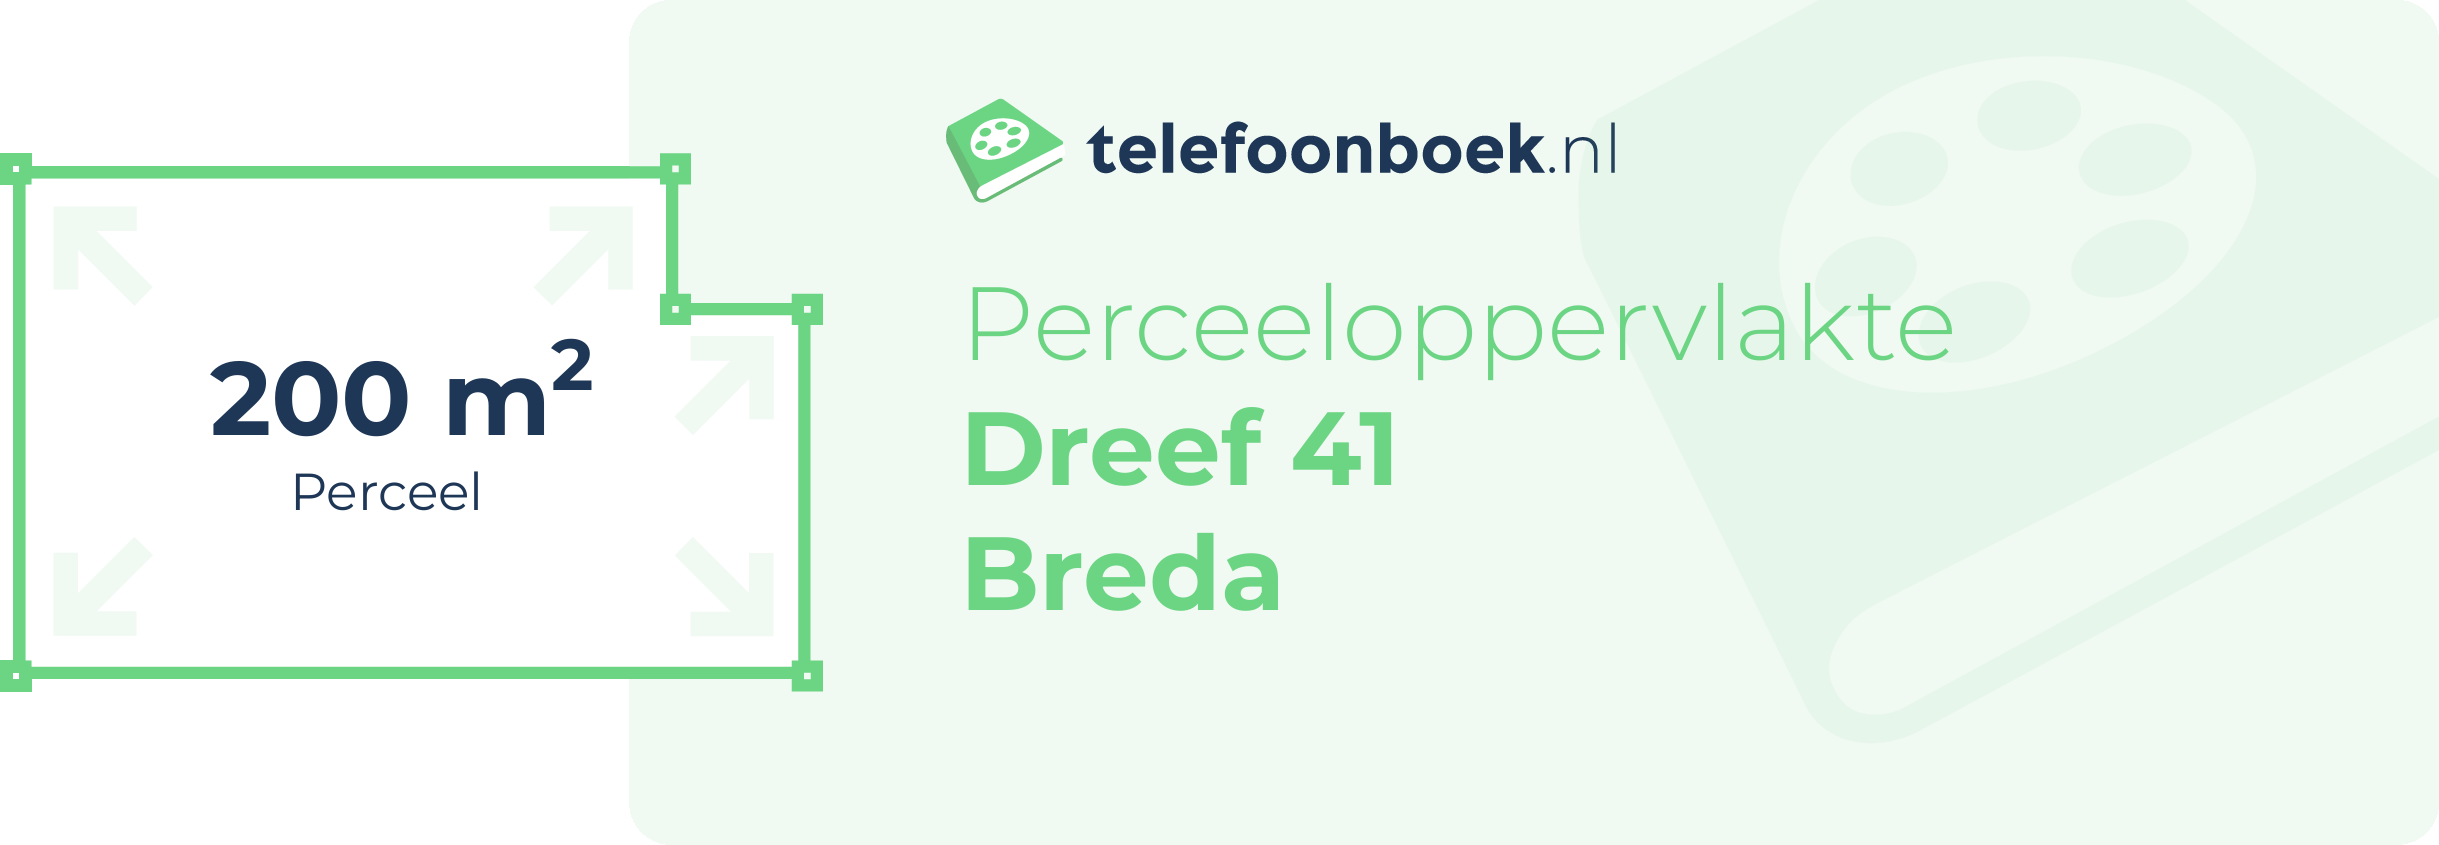 Perceeloppervlakte Dreef 41 Breda